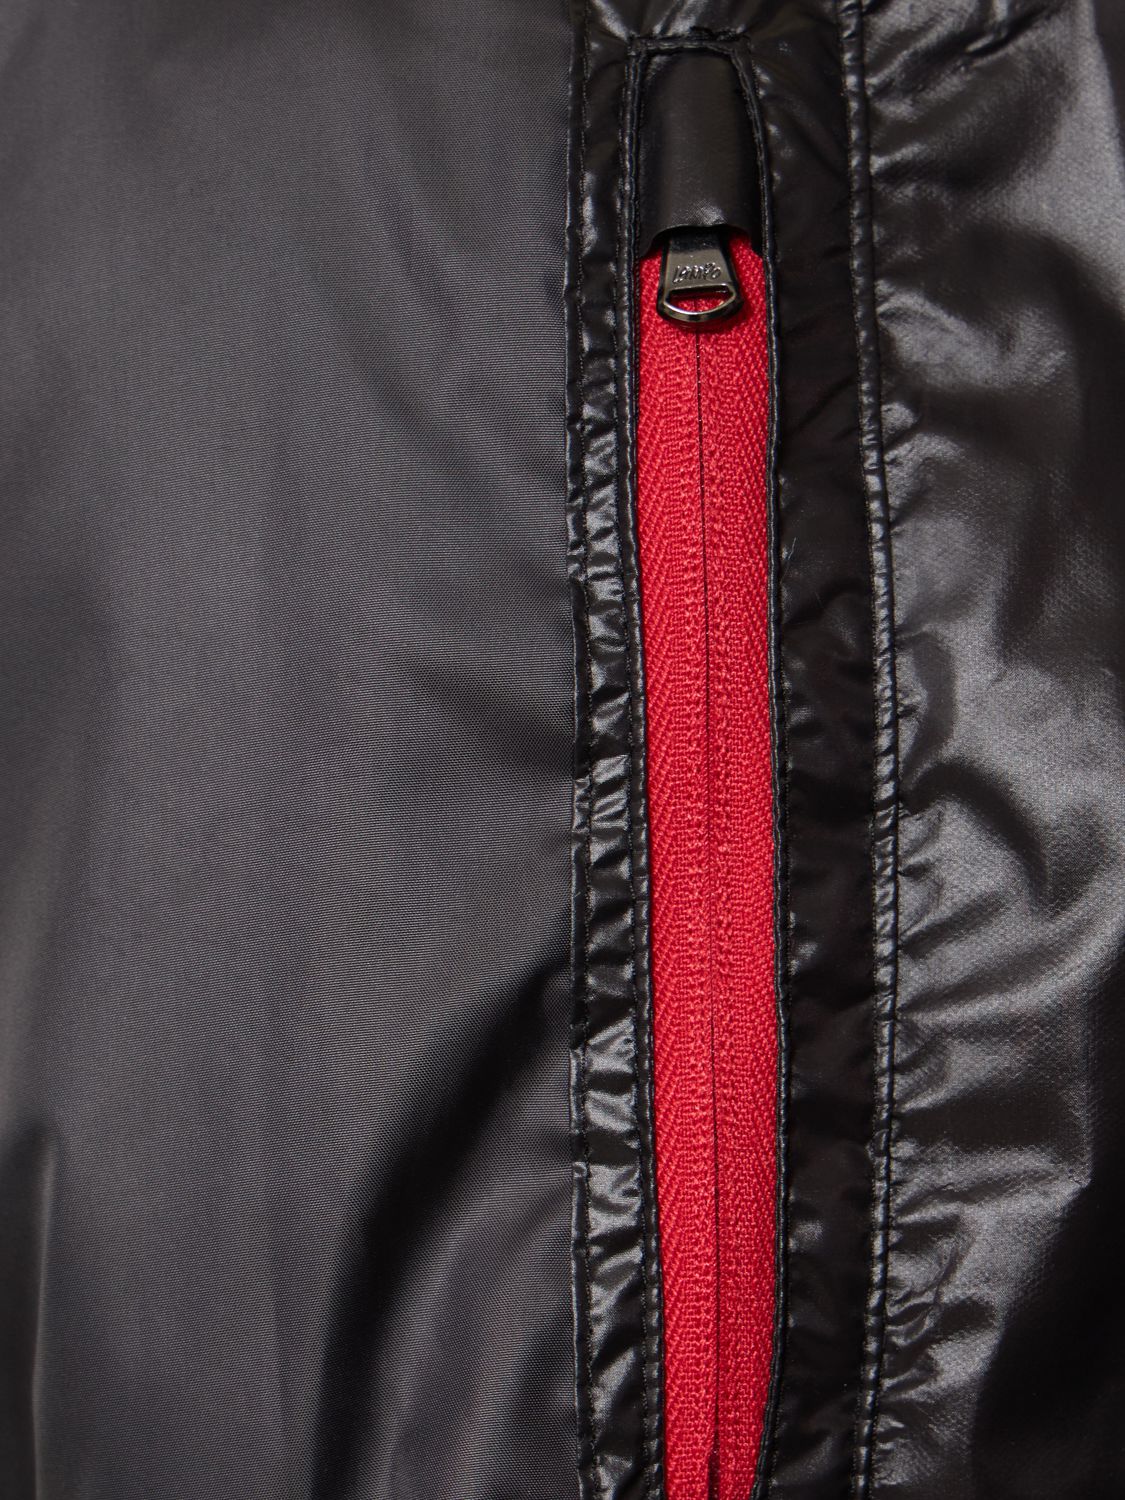 Erin Snow: Black Ledo Jacket